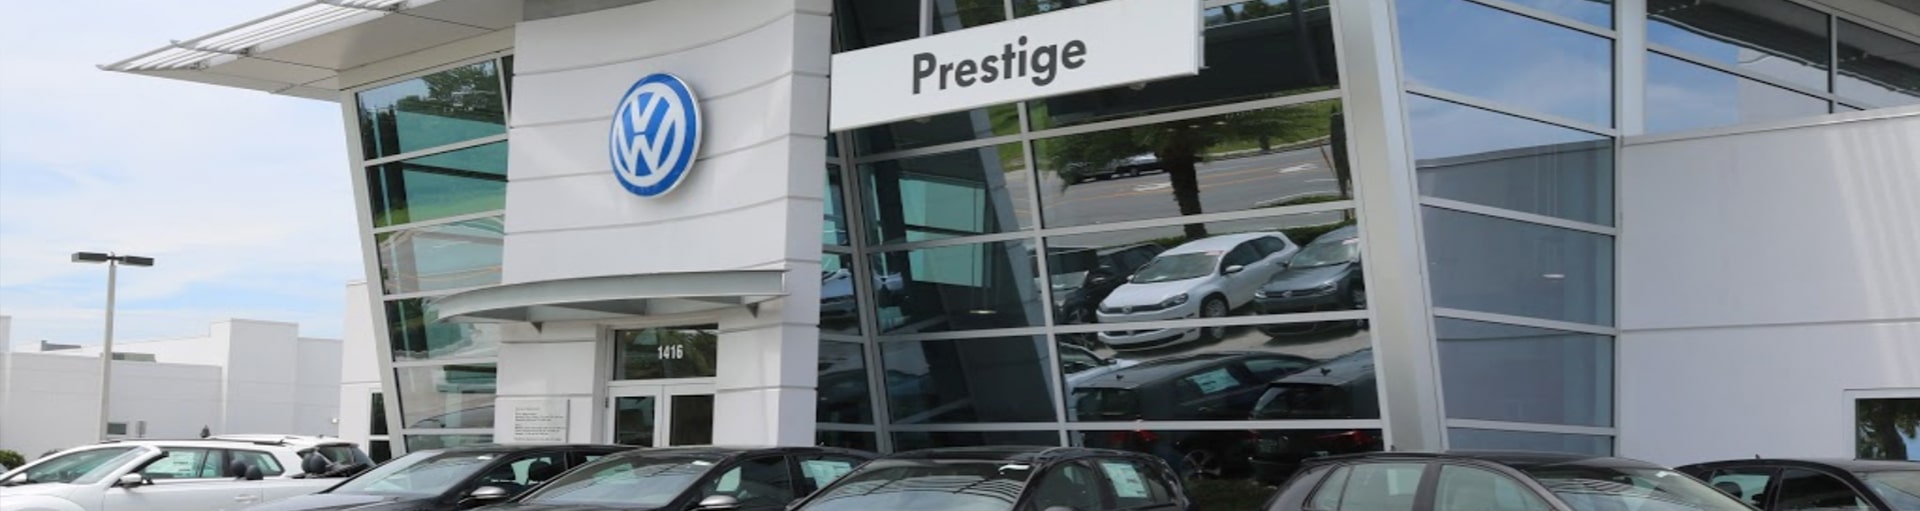 Prestige Volkswagen of Melbourne Cabin Air Filter Replacement